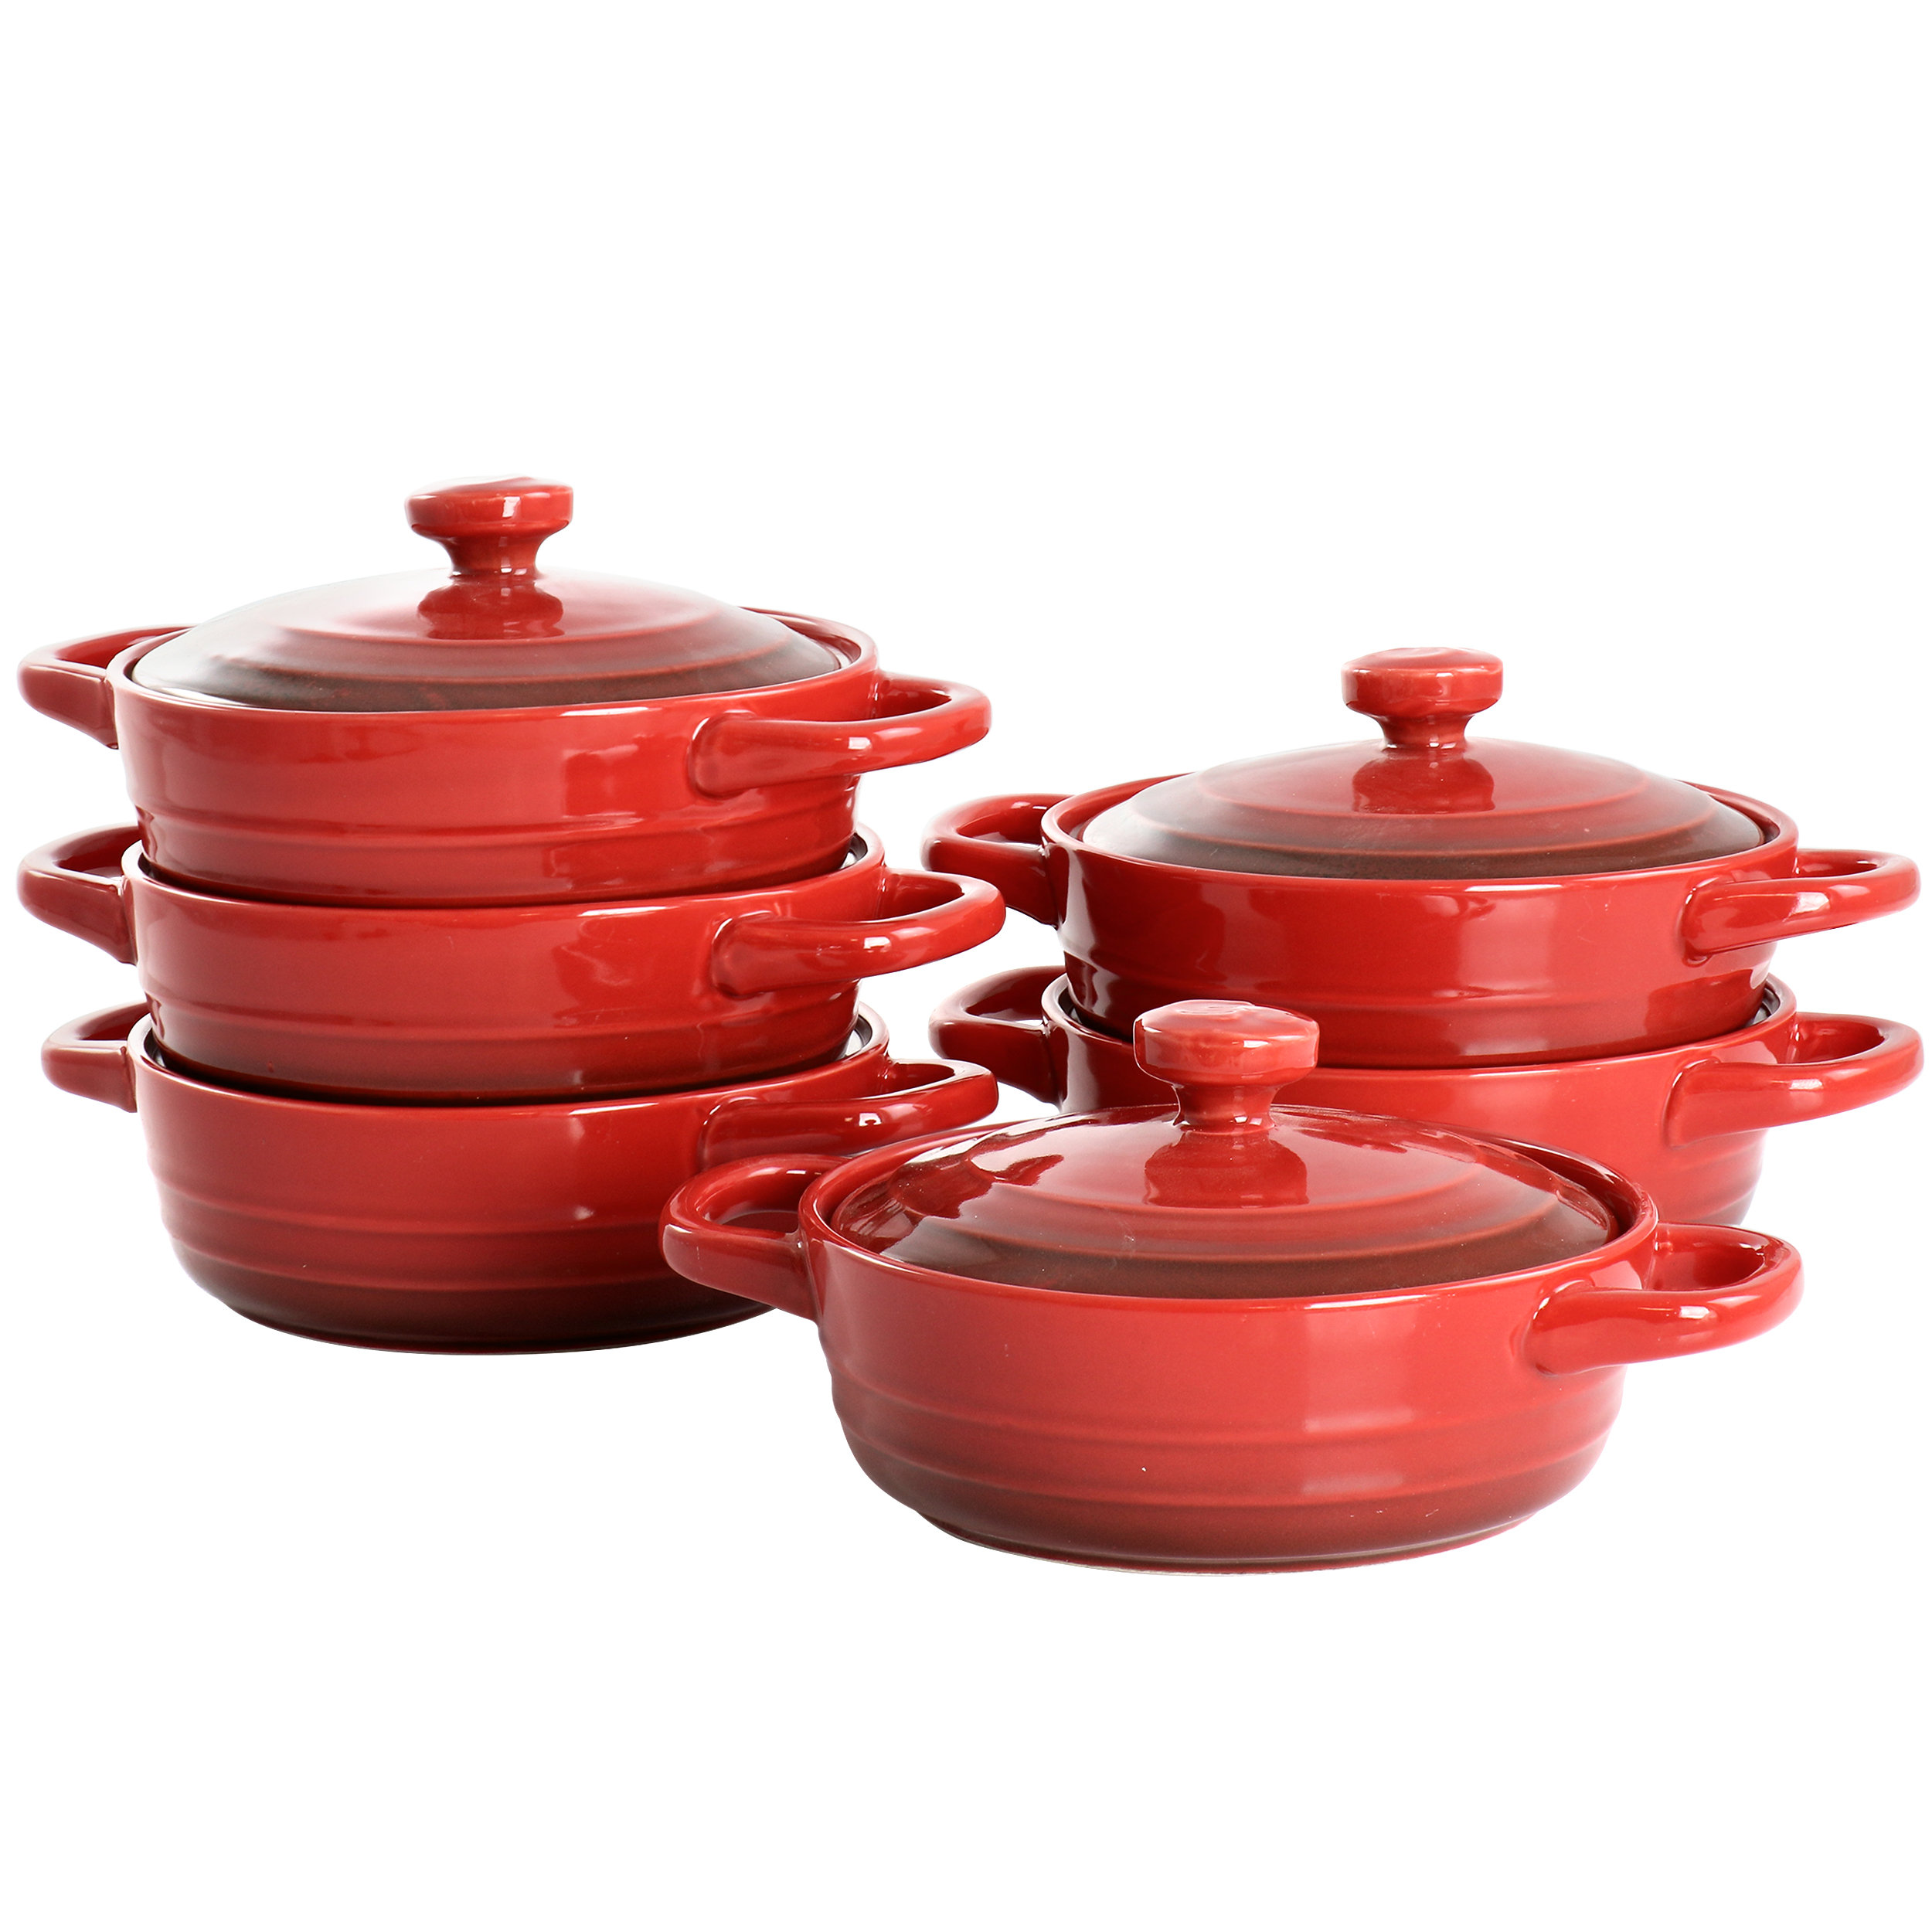 Joytable 24 Pcs Kitchen Cooking Utensil Set -Nylon Stainless Steel Non-Stick in Red